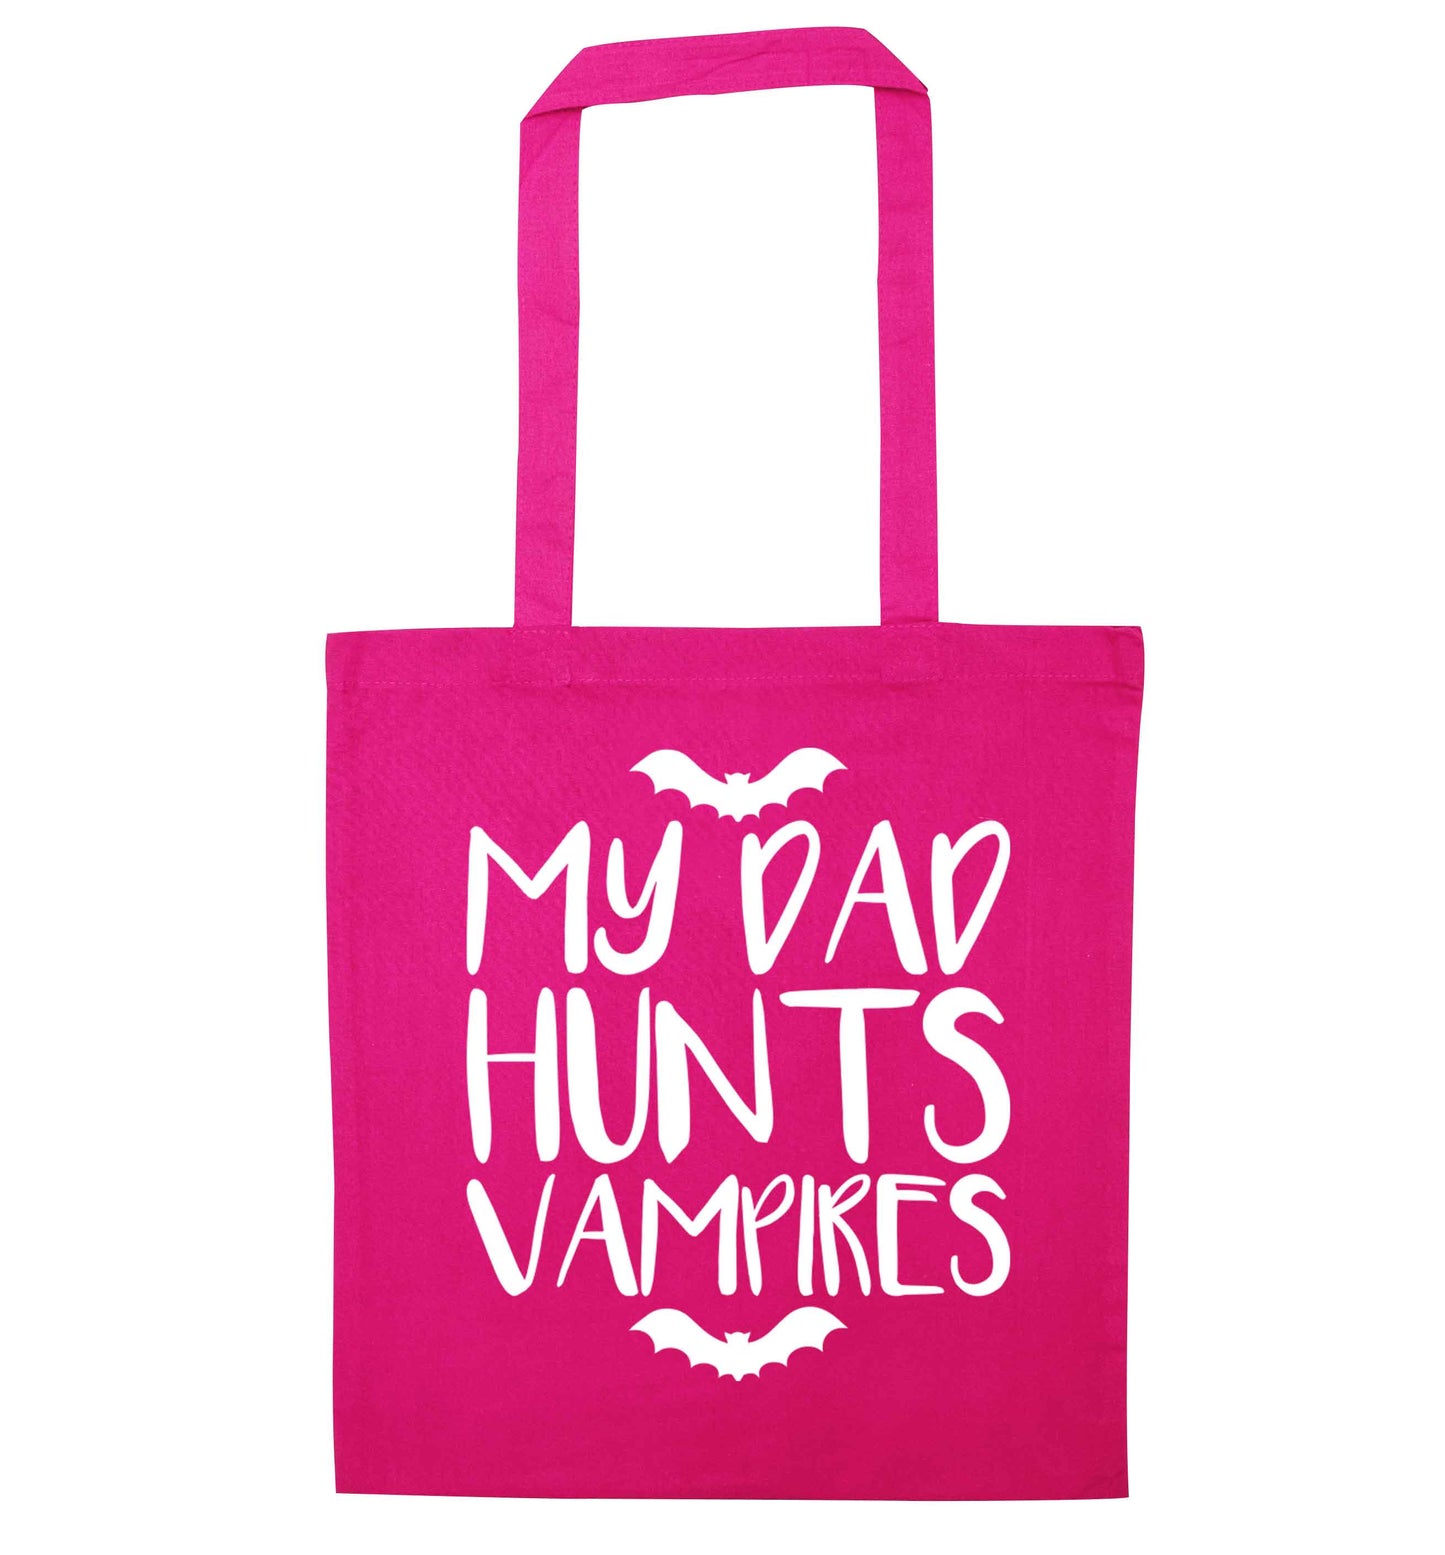 My dad hunts vampires pink tote bag